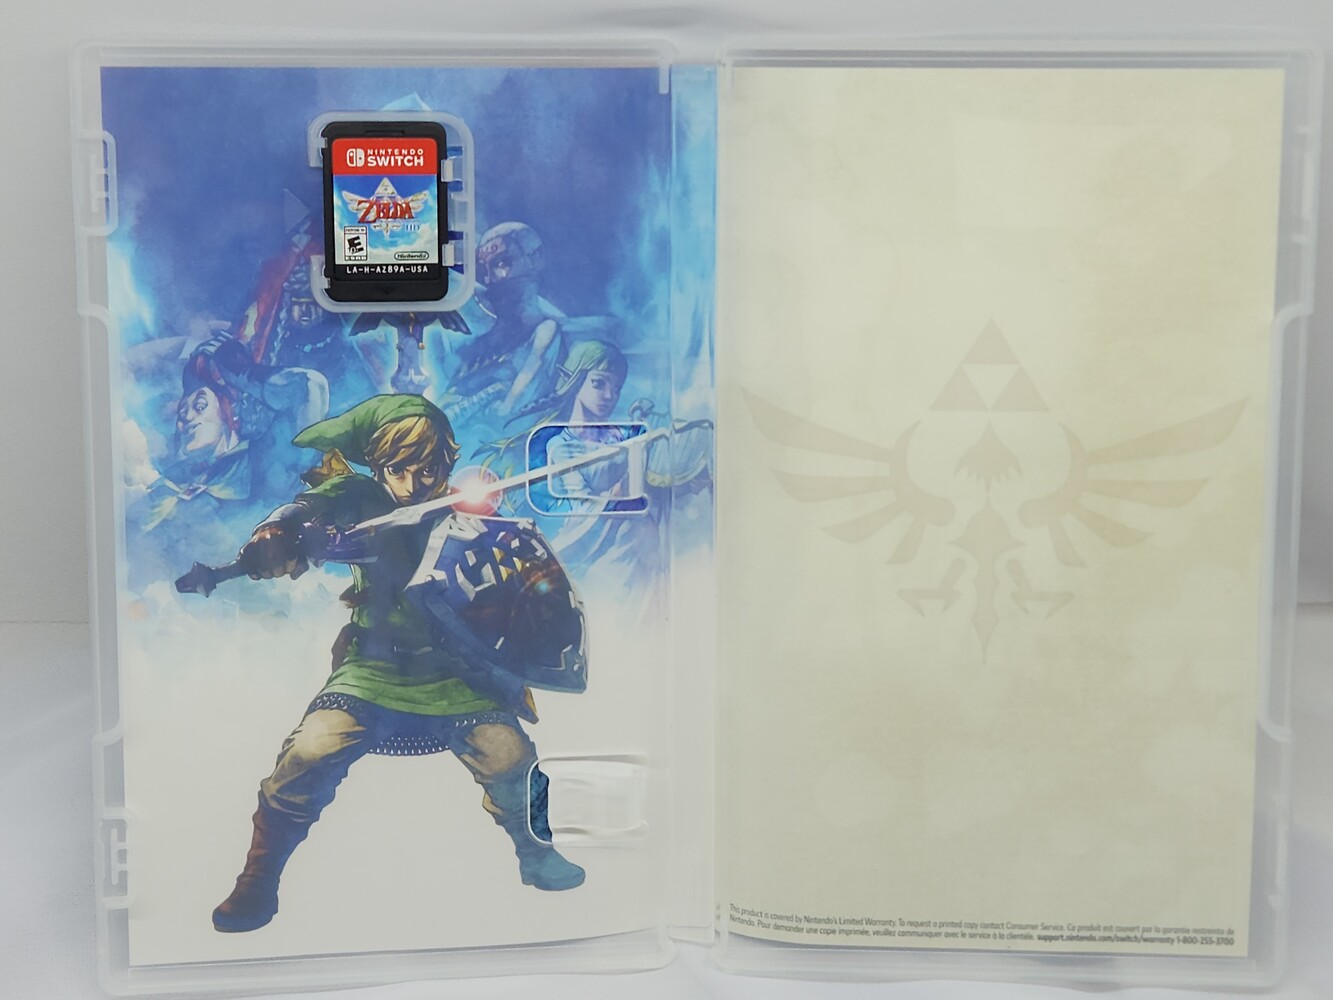 The Legend of Zelda: Skyward Sword HD for Nintendo Switch